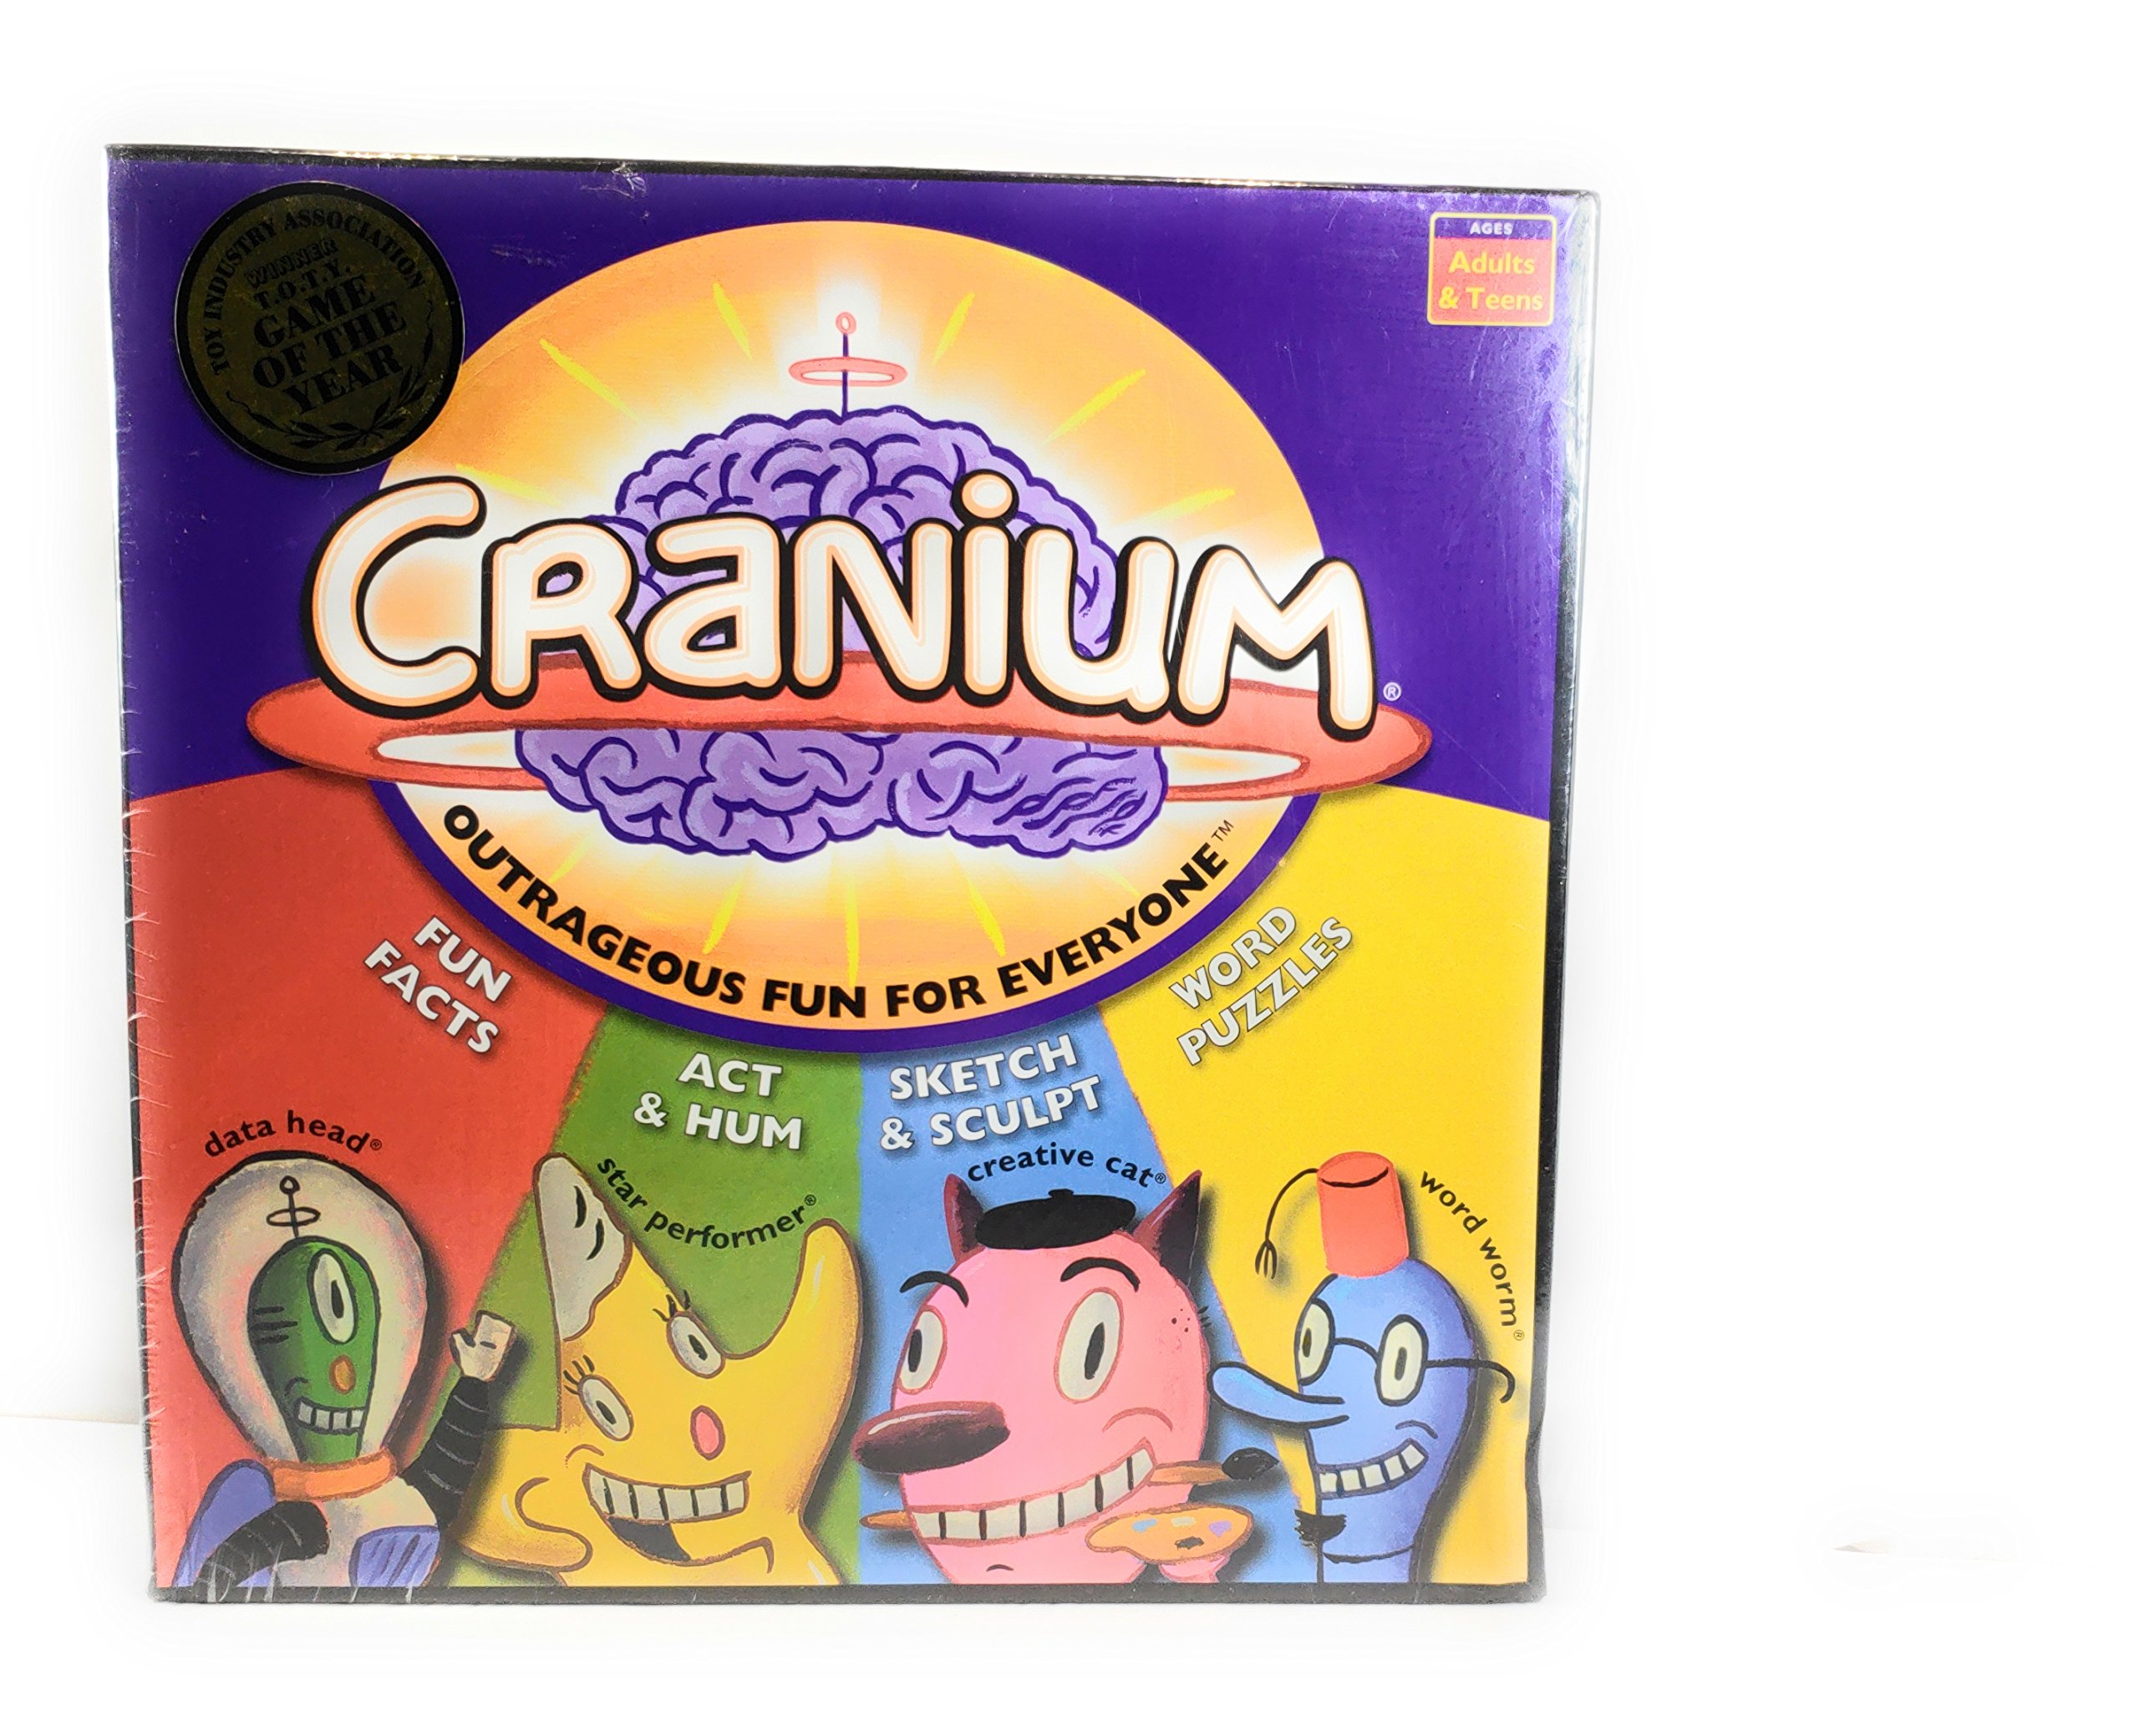 Cranium Outrageous Fun For Everyone